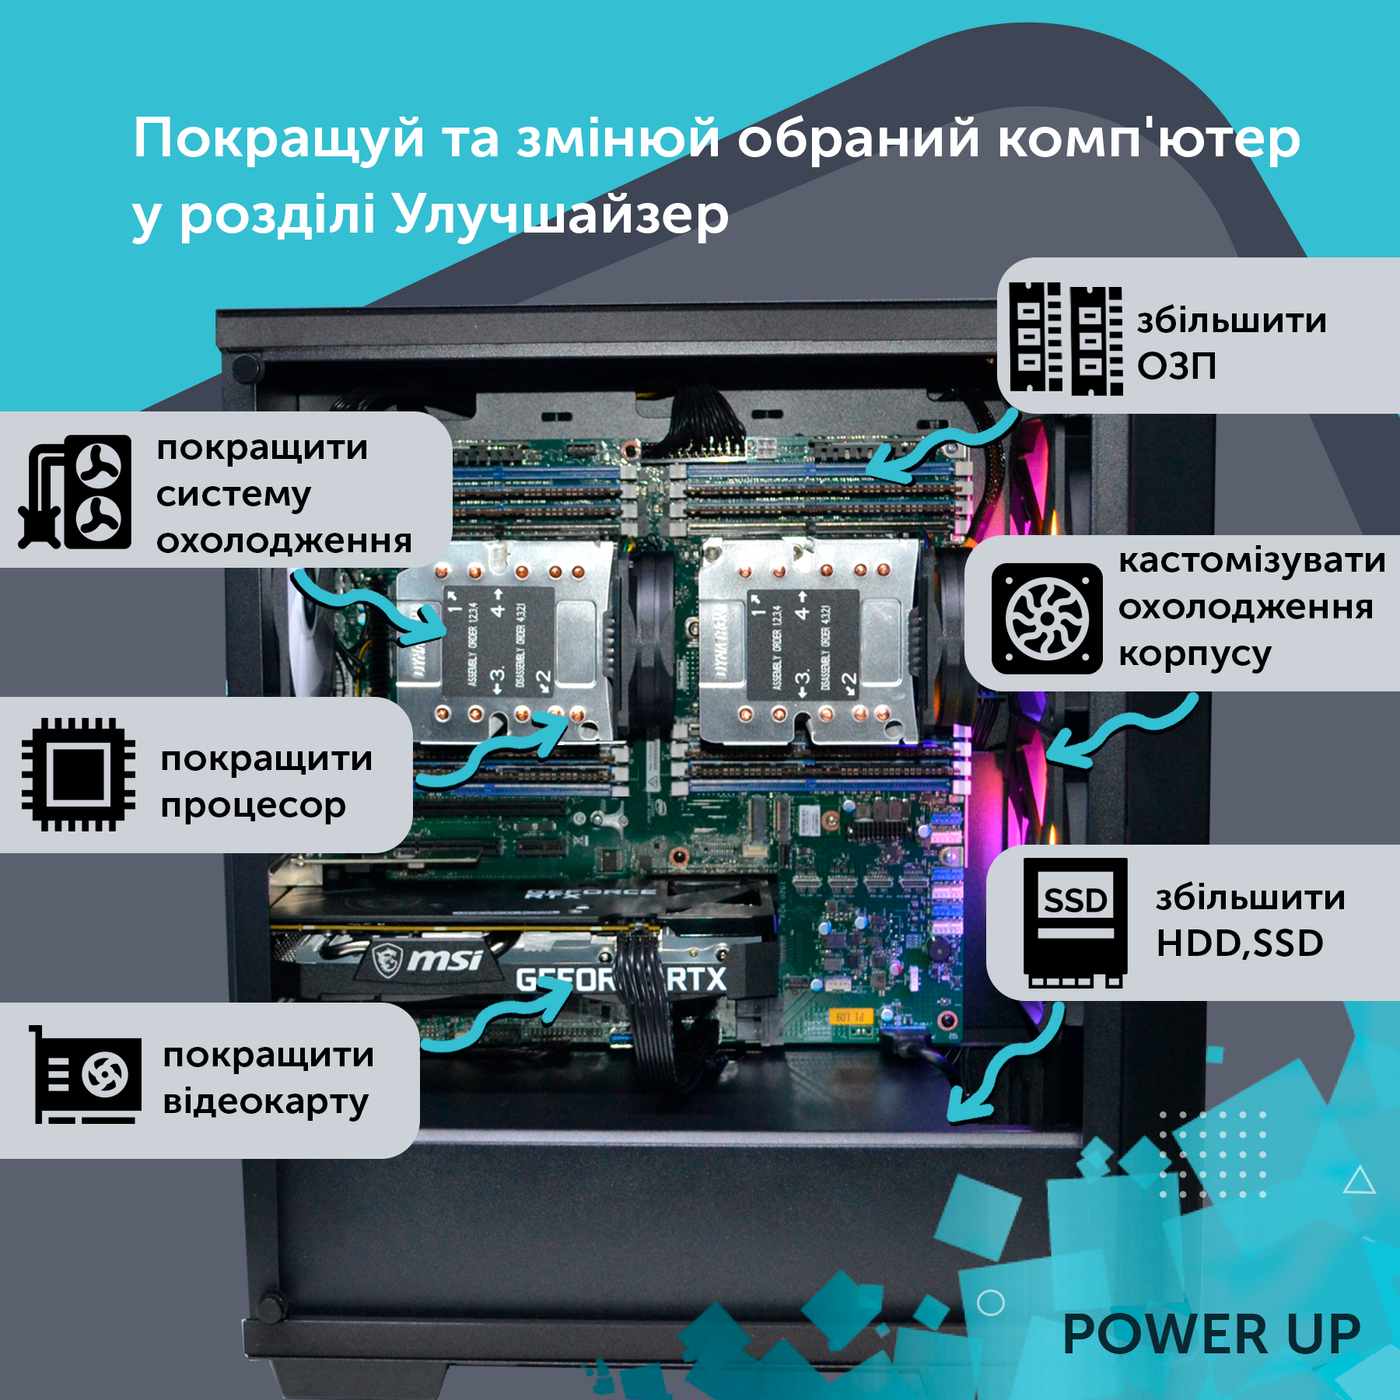 Рабочая станция PowerUp Desktop #373 Core i9 14900K/128 GB/SSD 2TB/GeForce RTX 4090 24GB